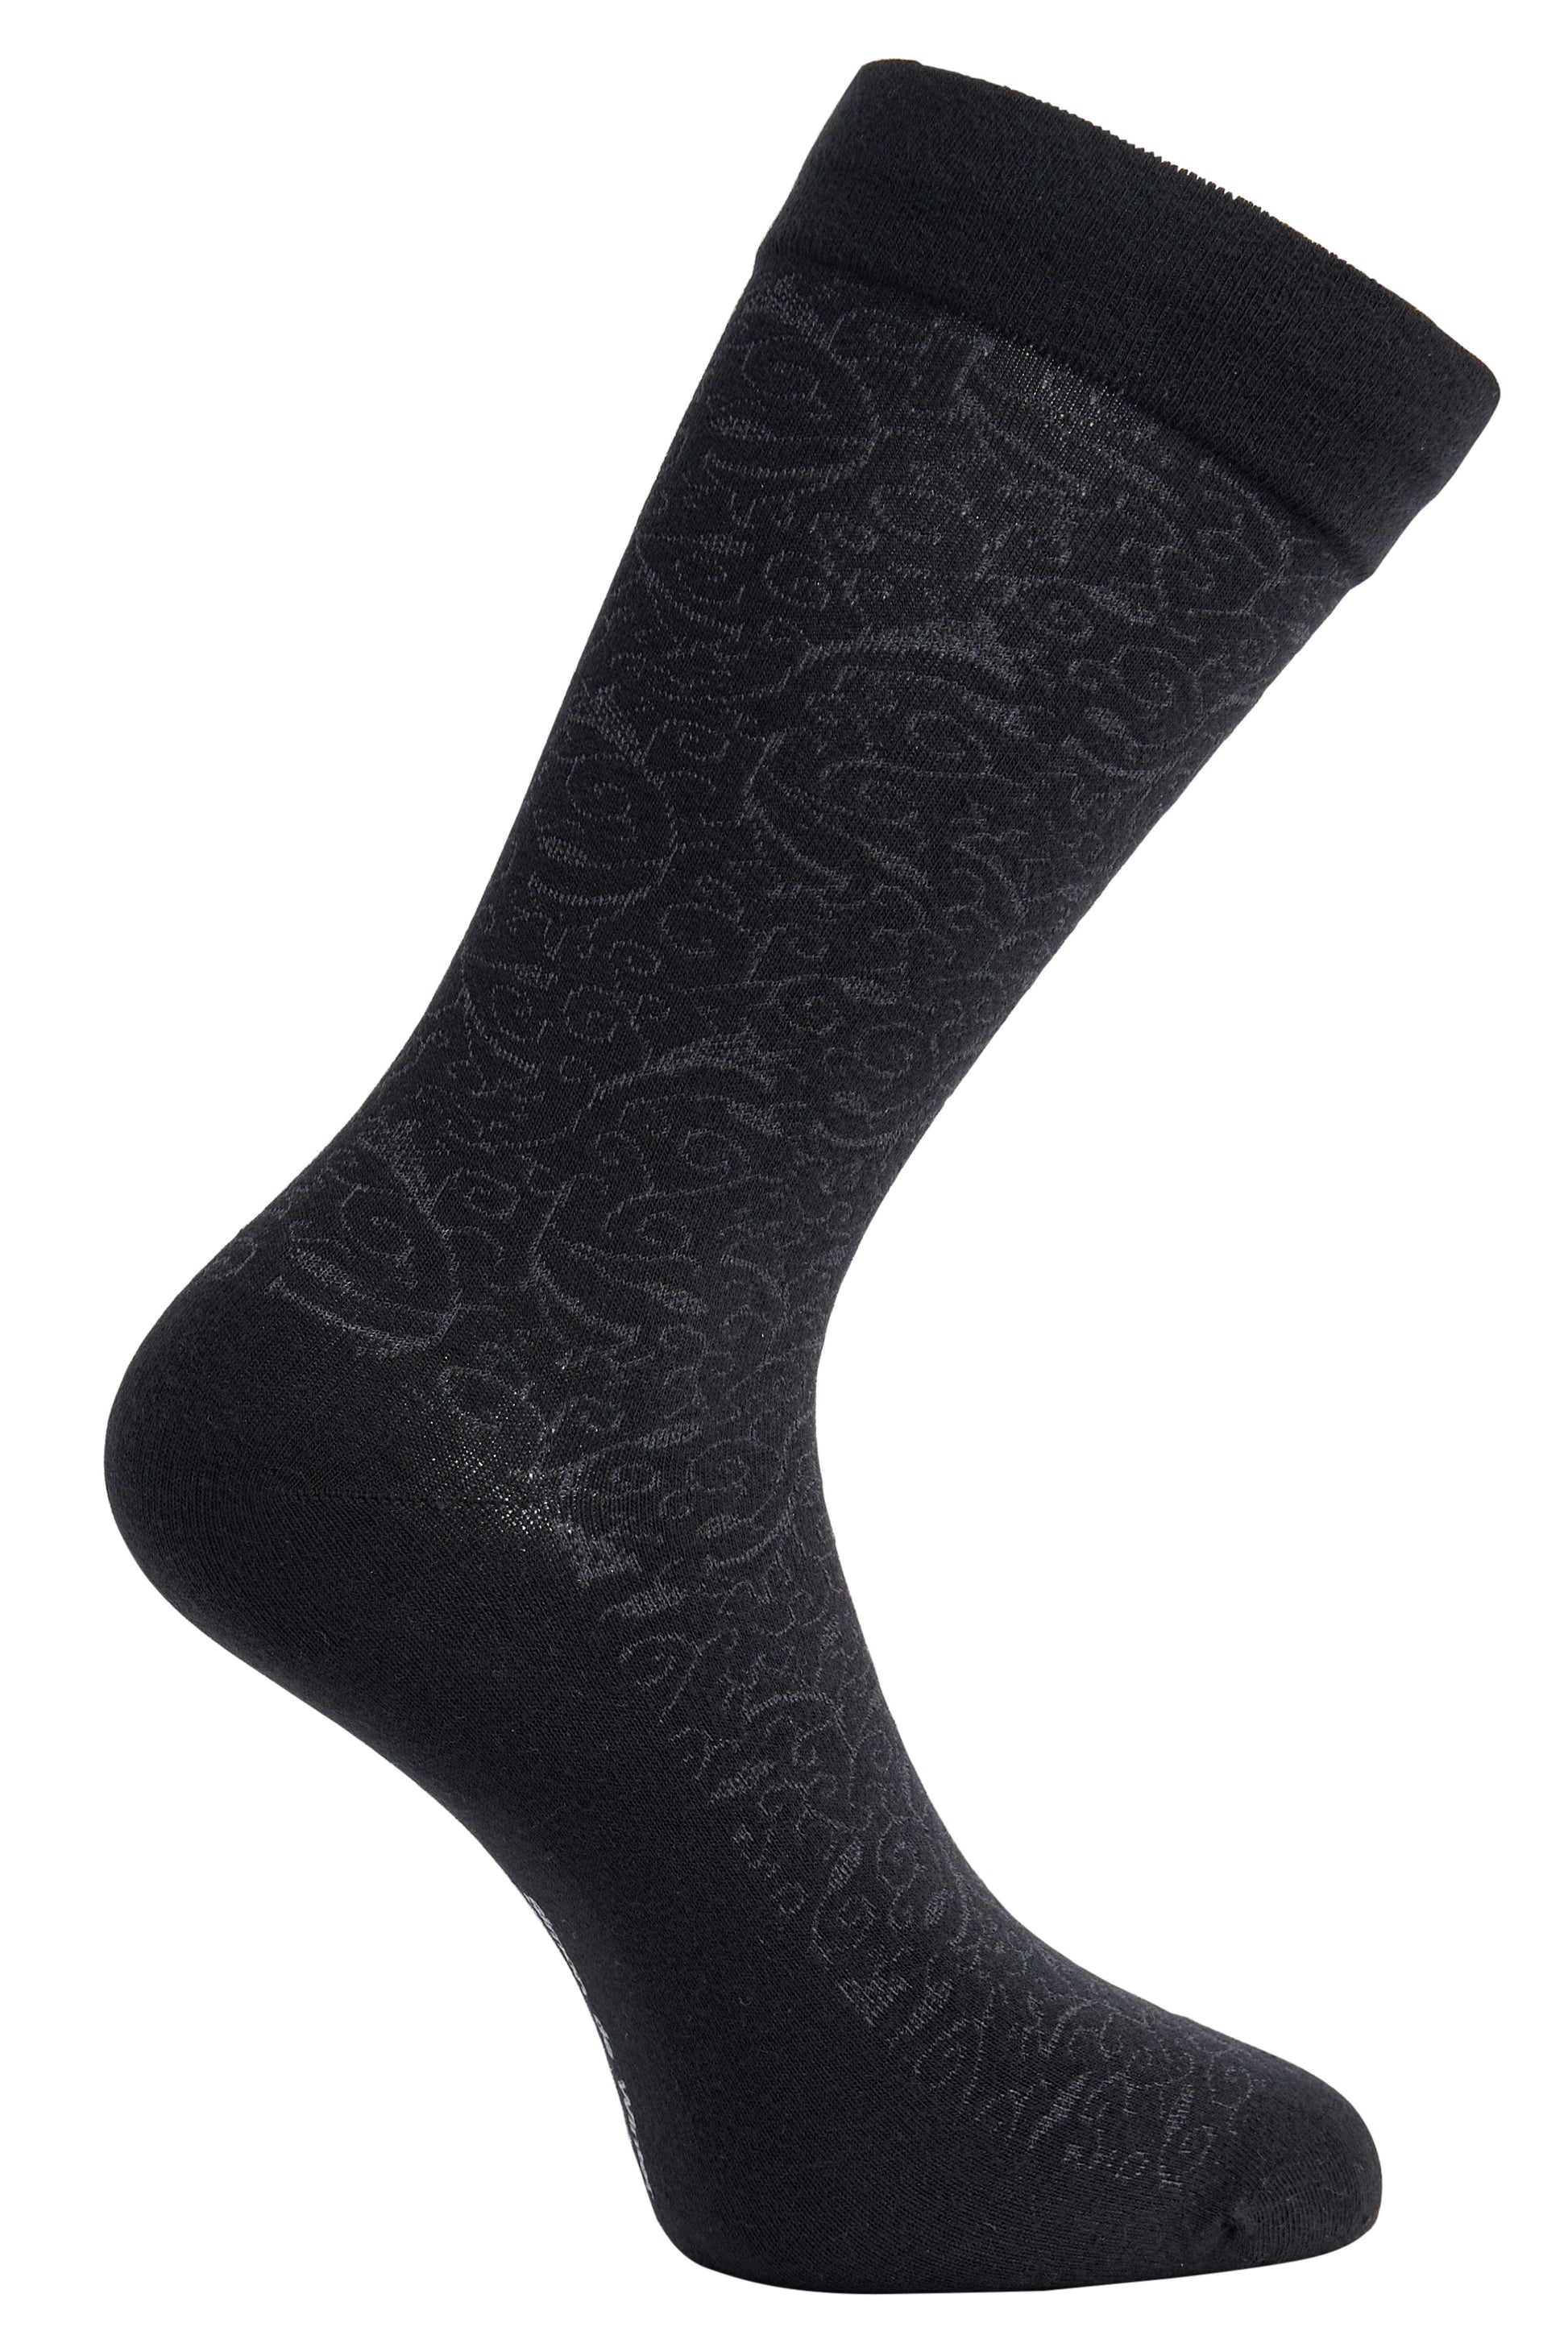 Side of Simon de Winter Women's Circulation Comfort Cotton Crew Socks in Black